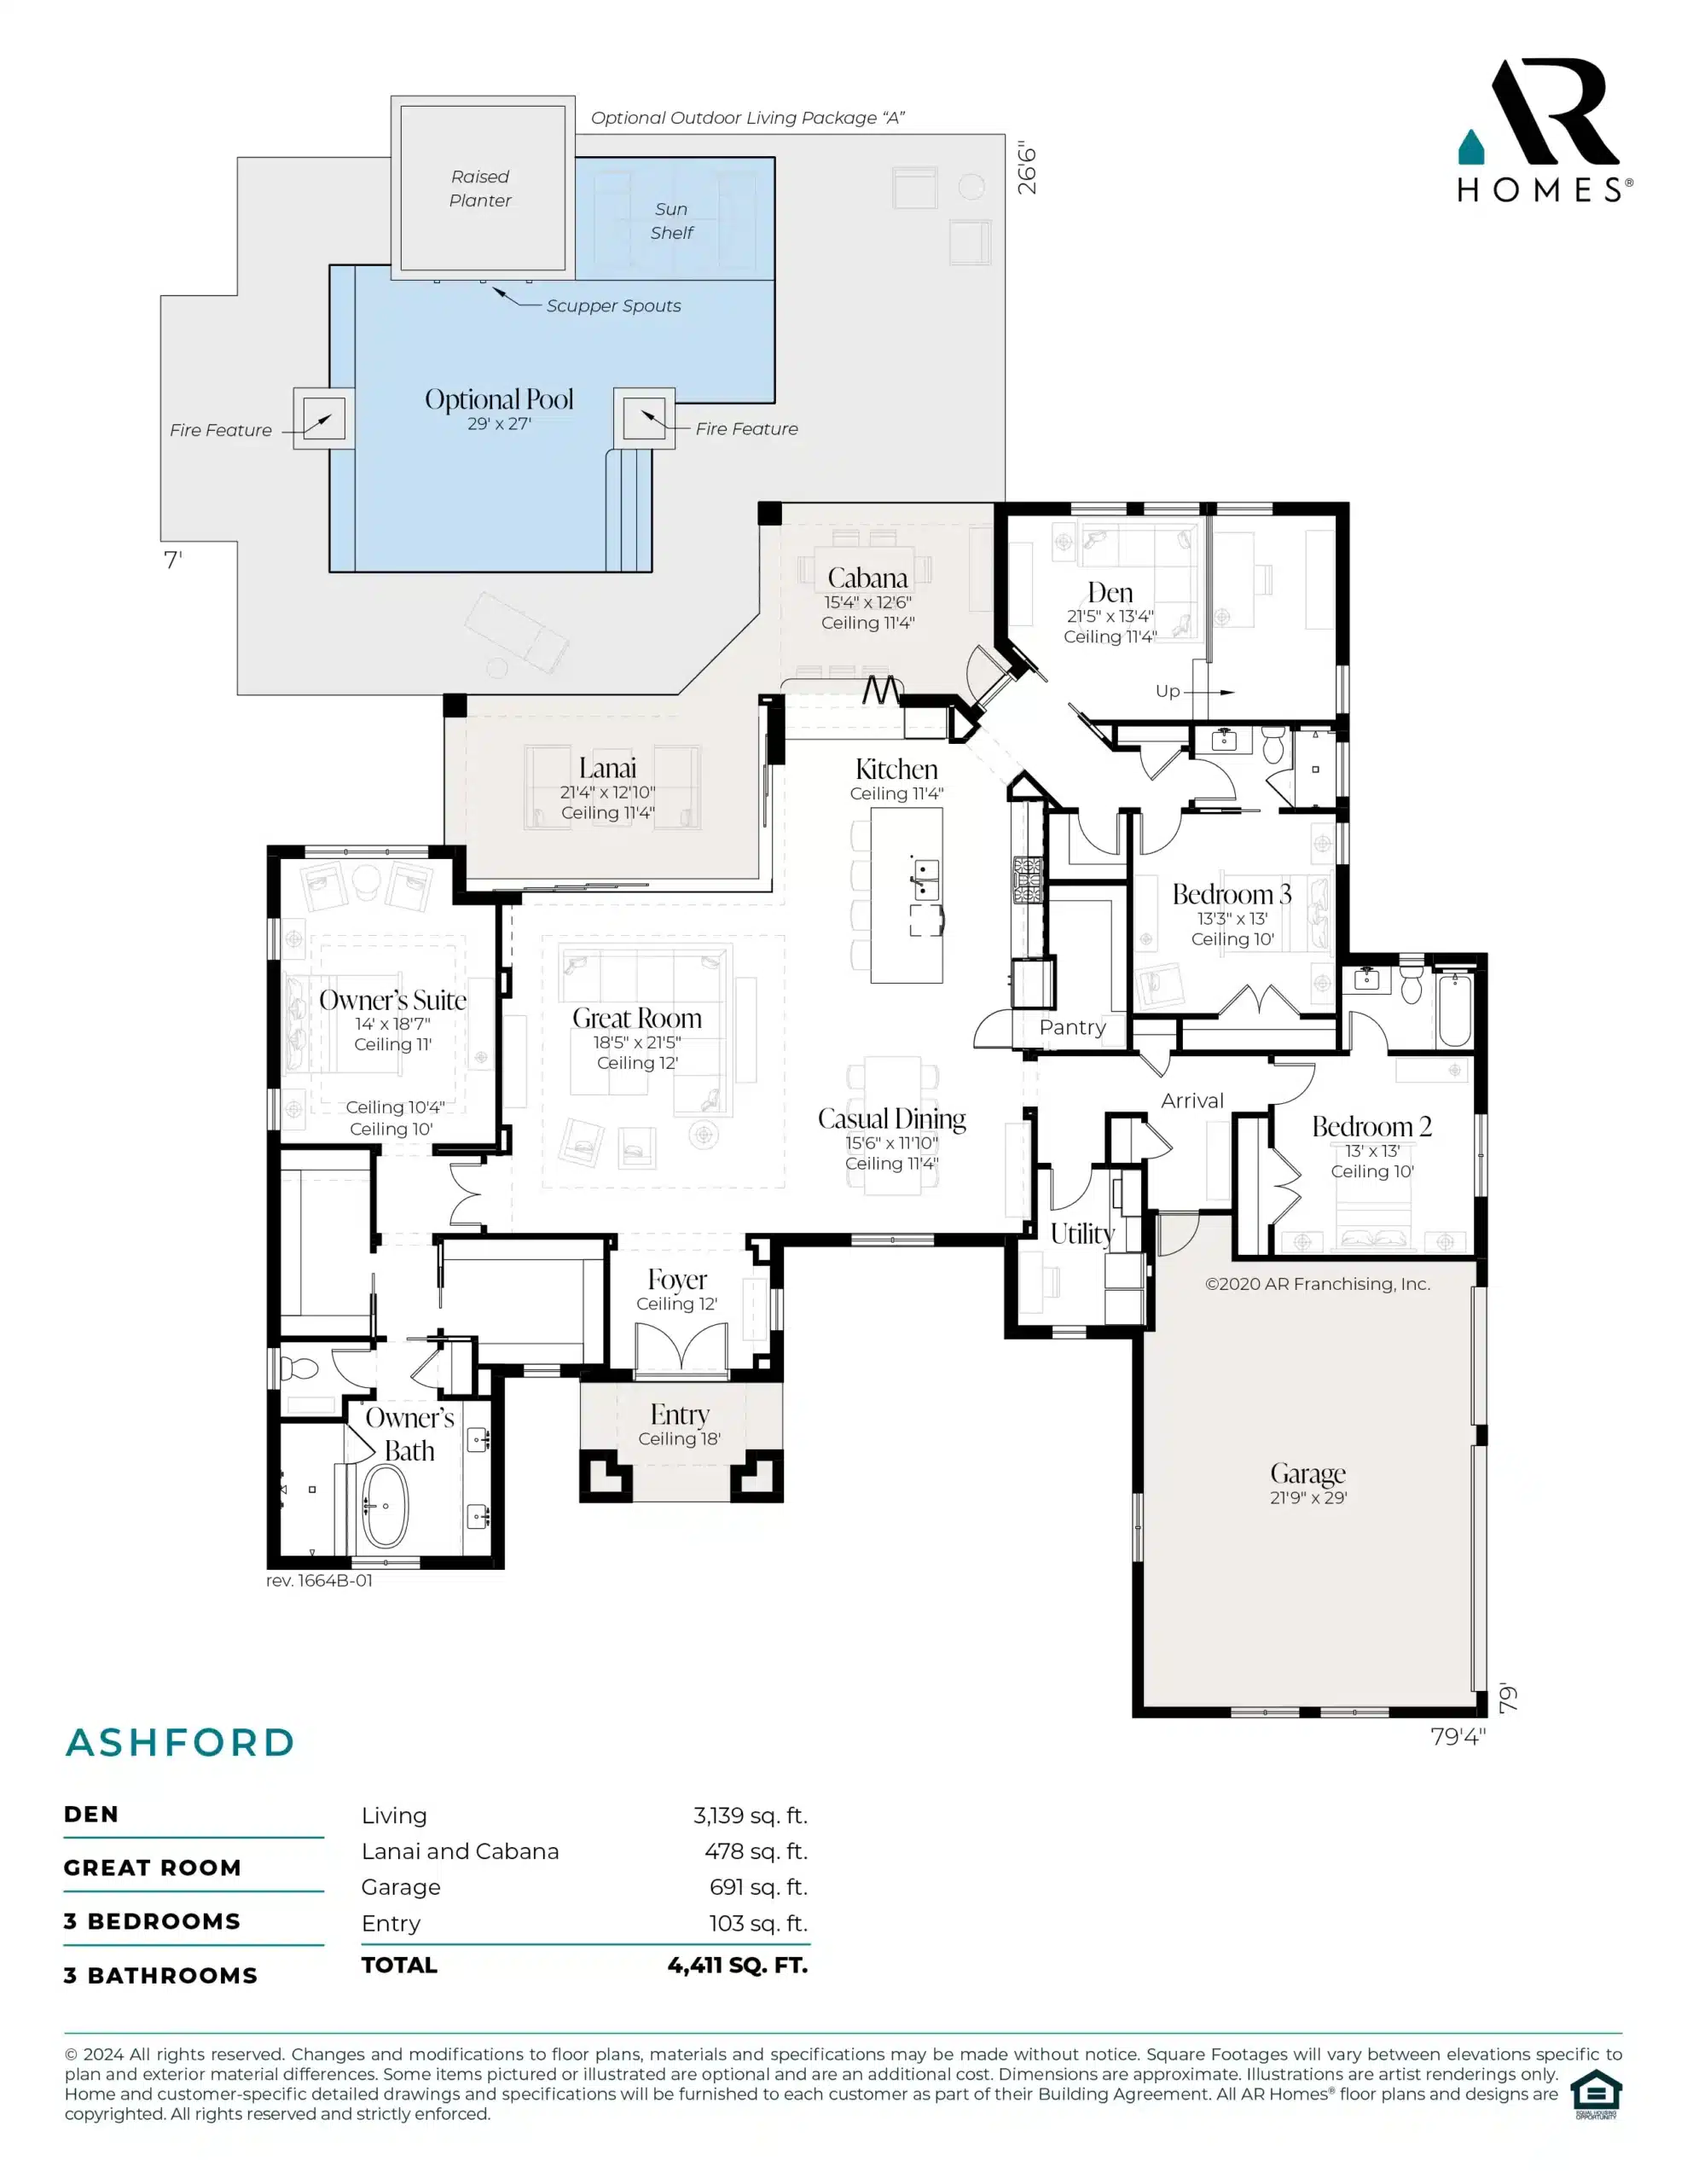 The Ashford Plan Ar Homes By Arthur Rutenberg